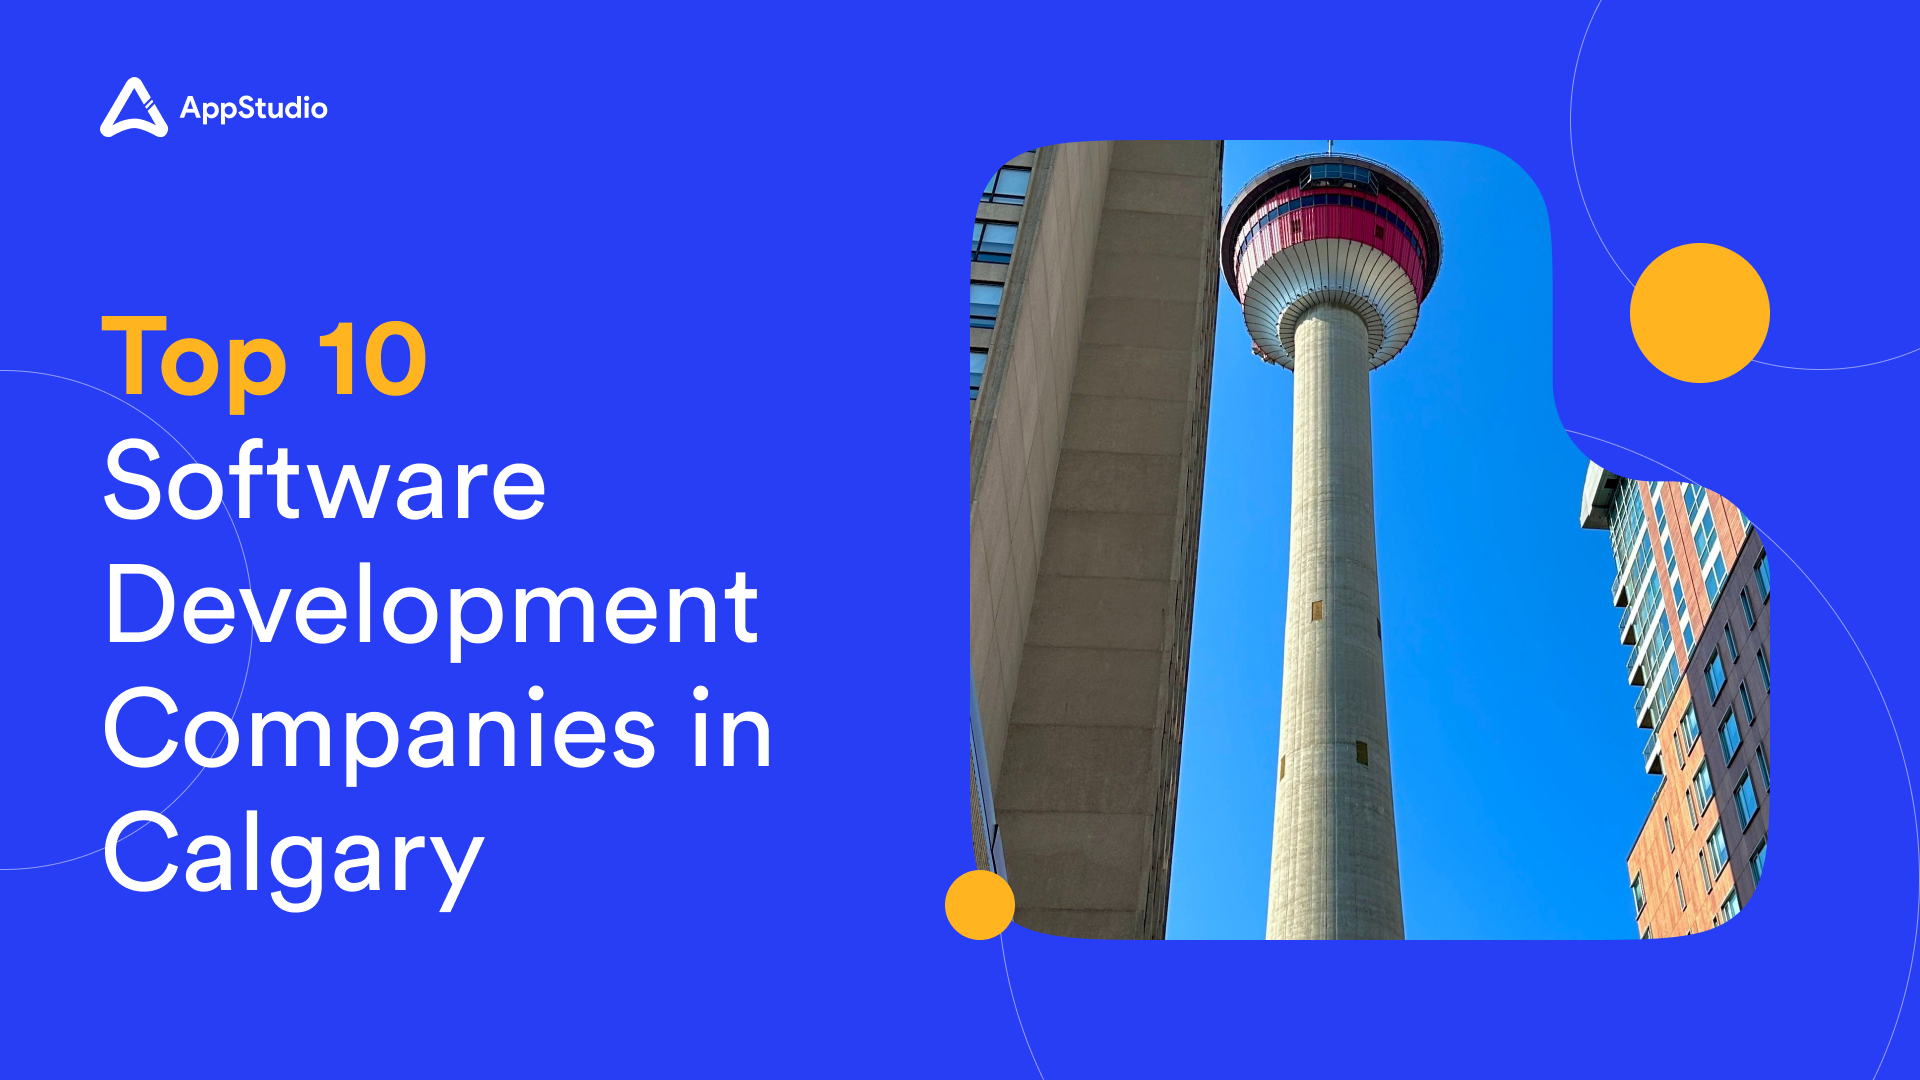 Top 10 Software Development Companies In Calgary